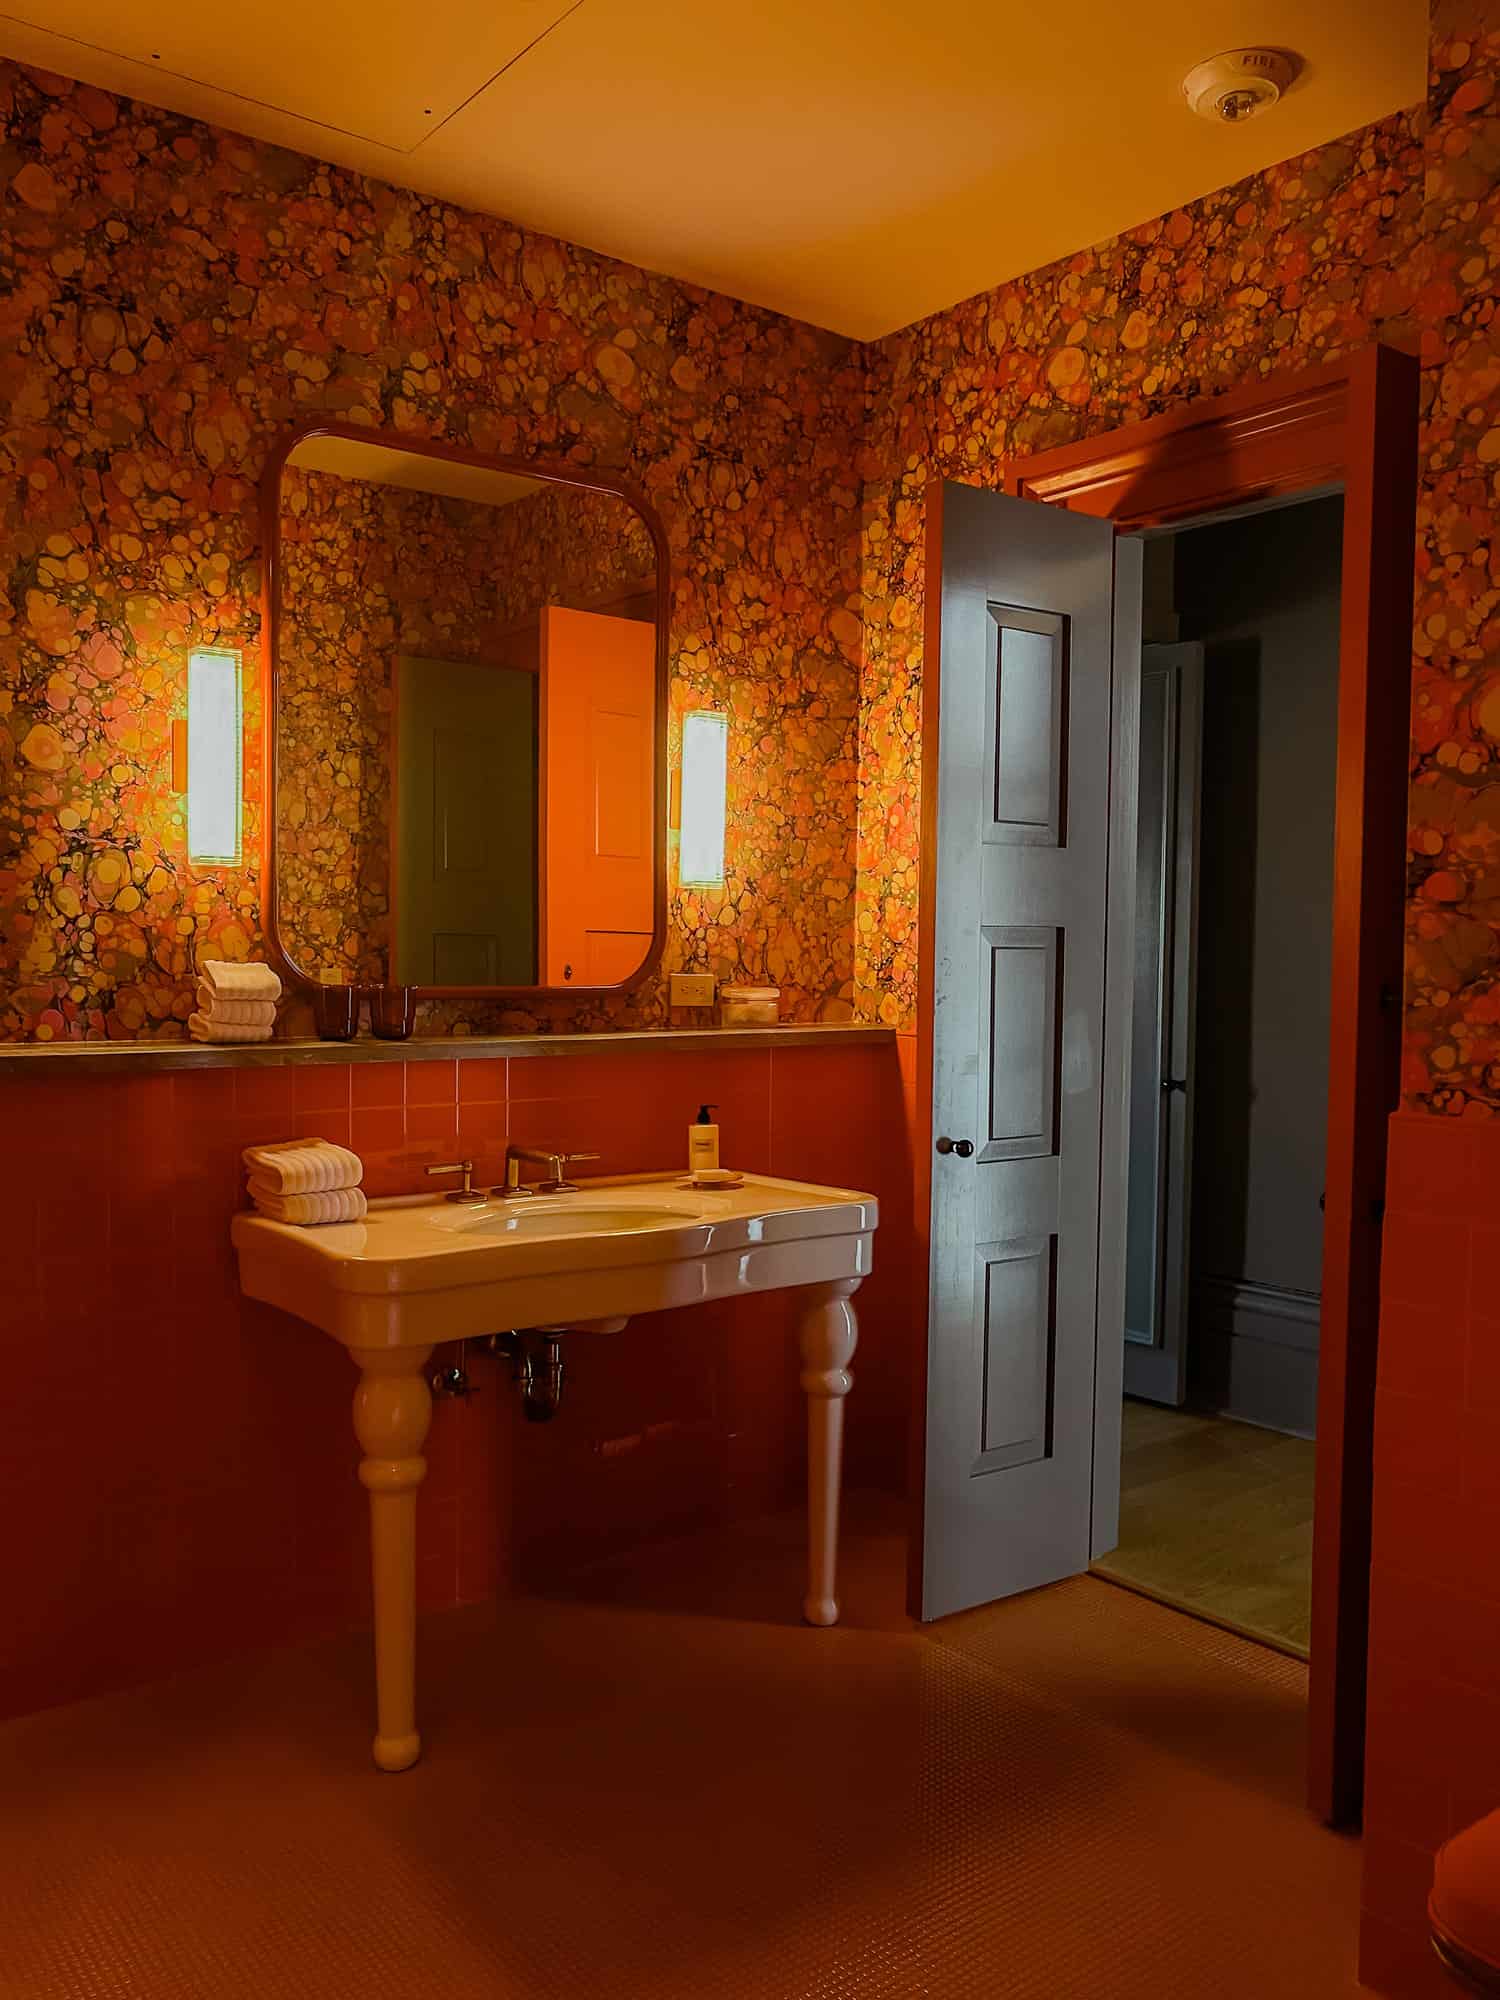 an ornate bathroom